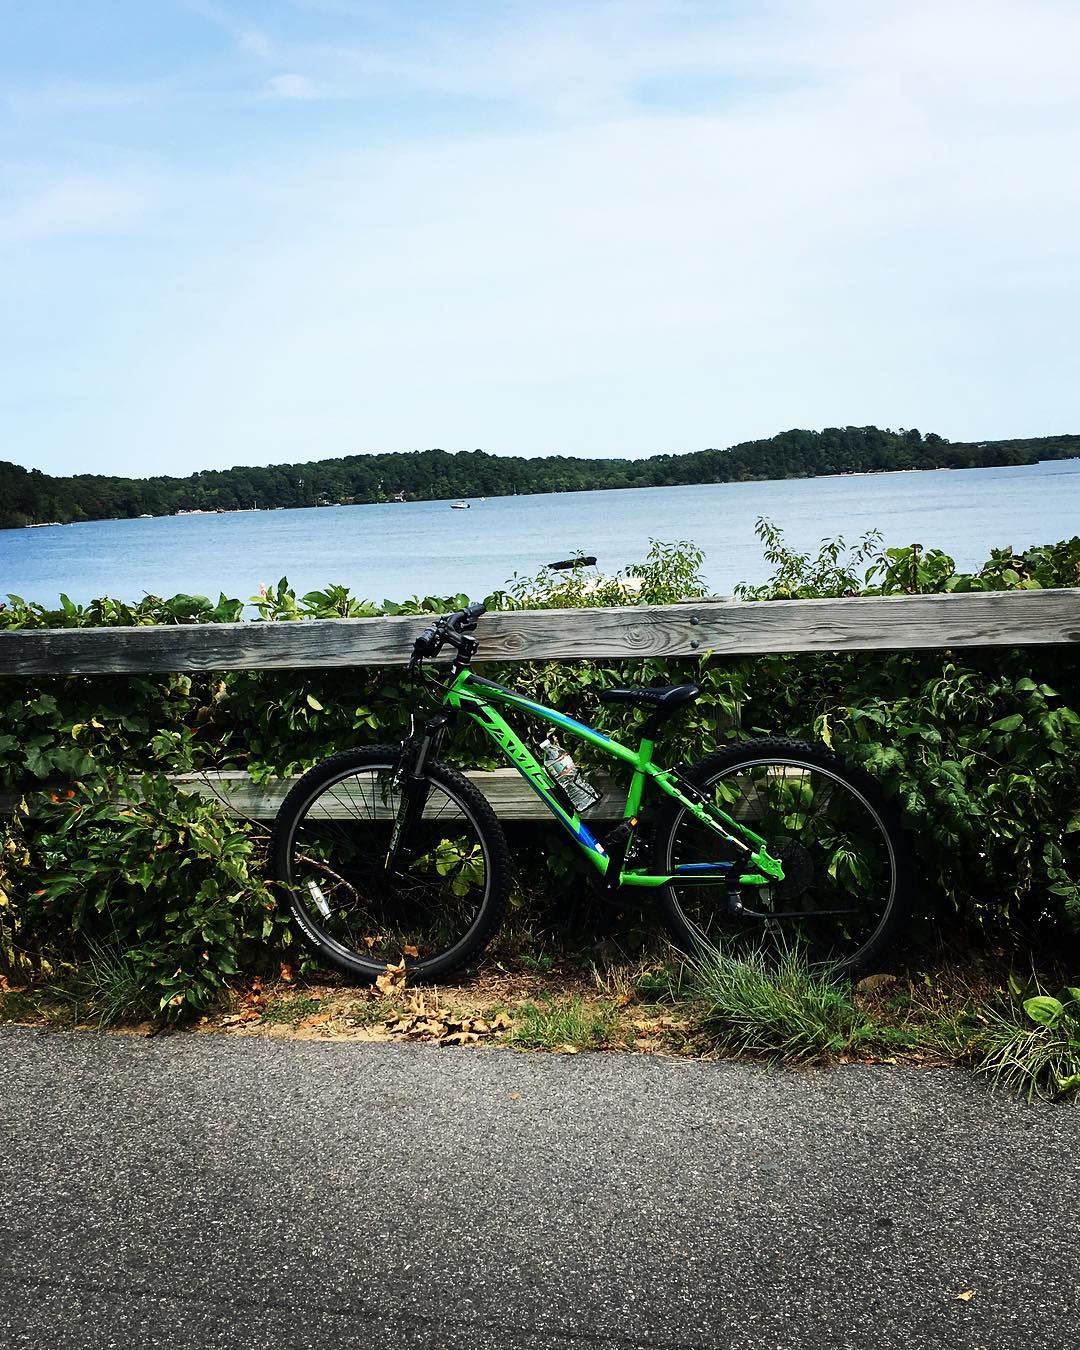 Cape Cod Rail Trail Bicycling in Massachusetts